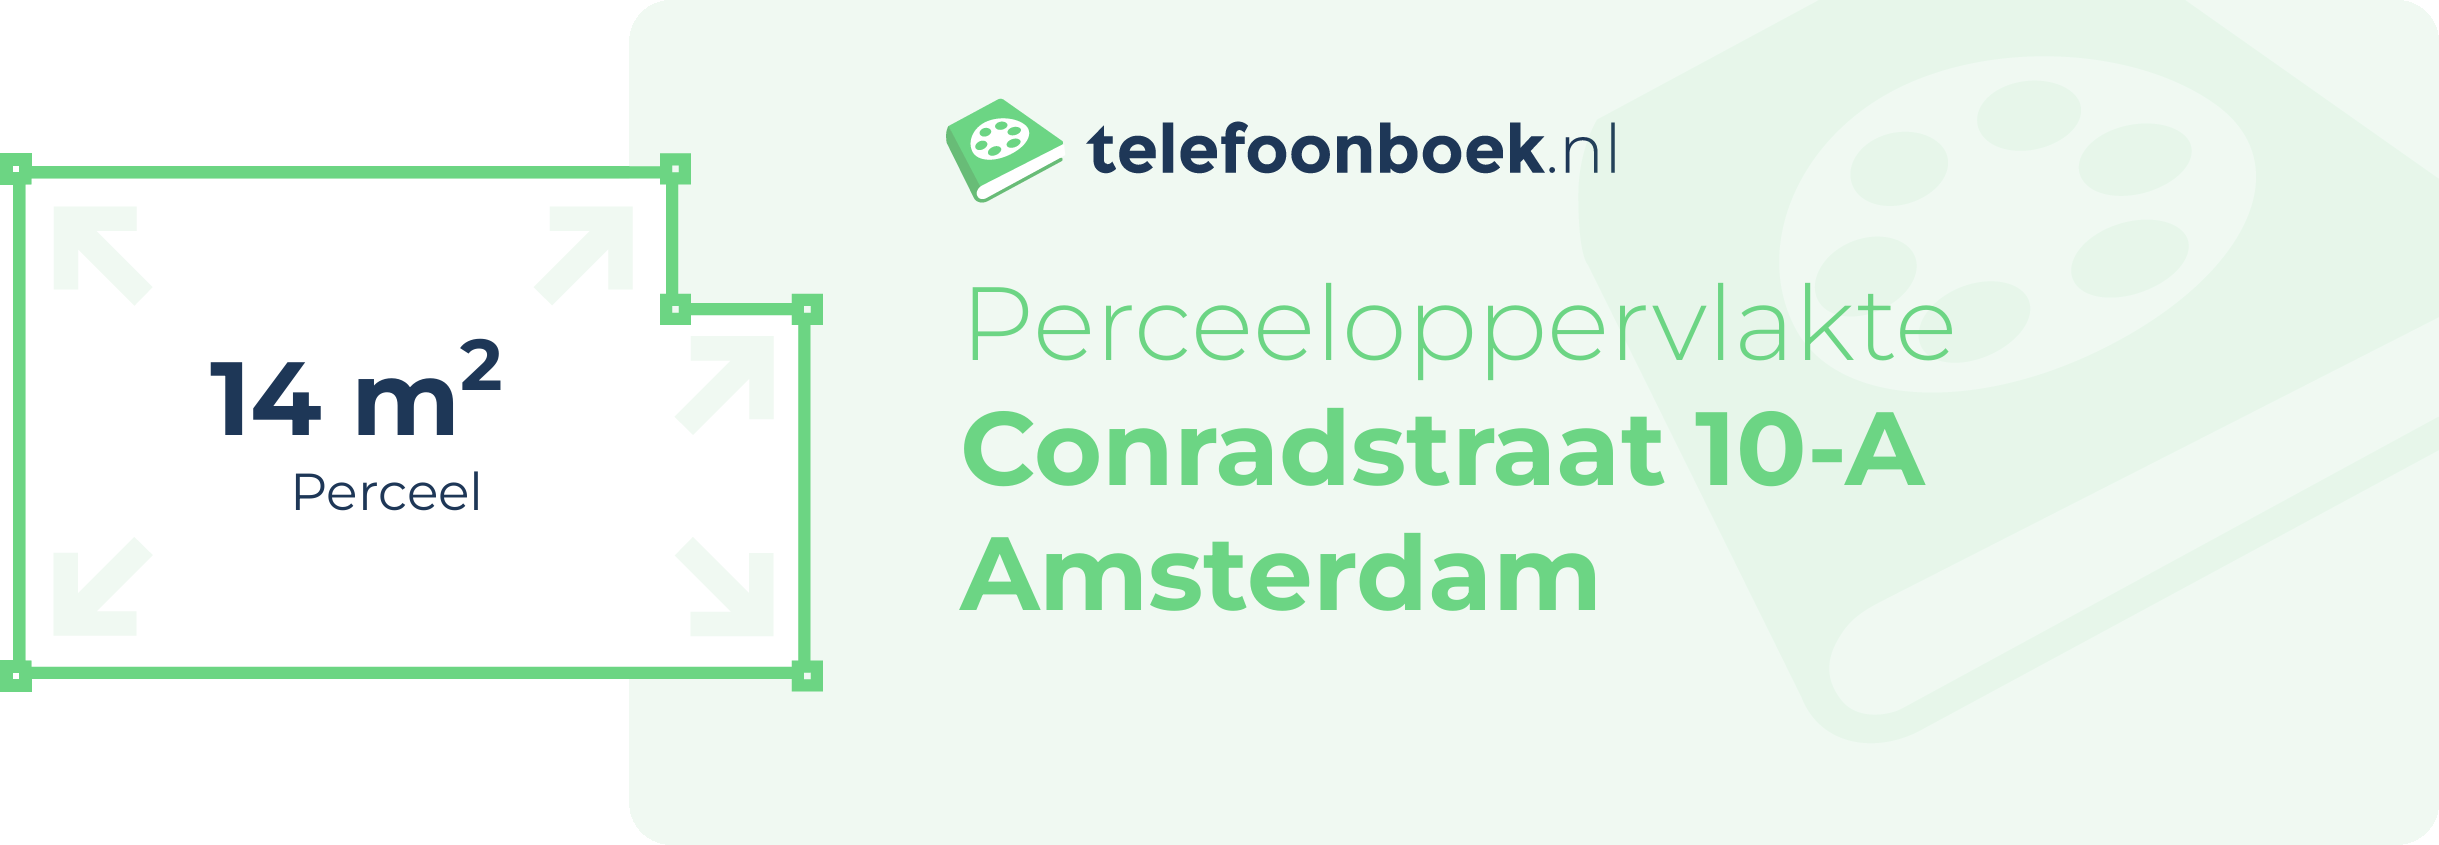 Perceeloppervlakte Conradstraat 10-A Amsterdam